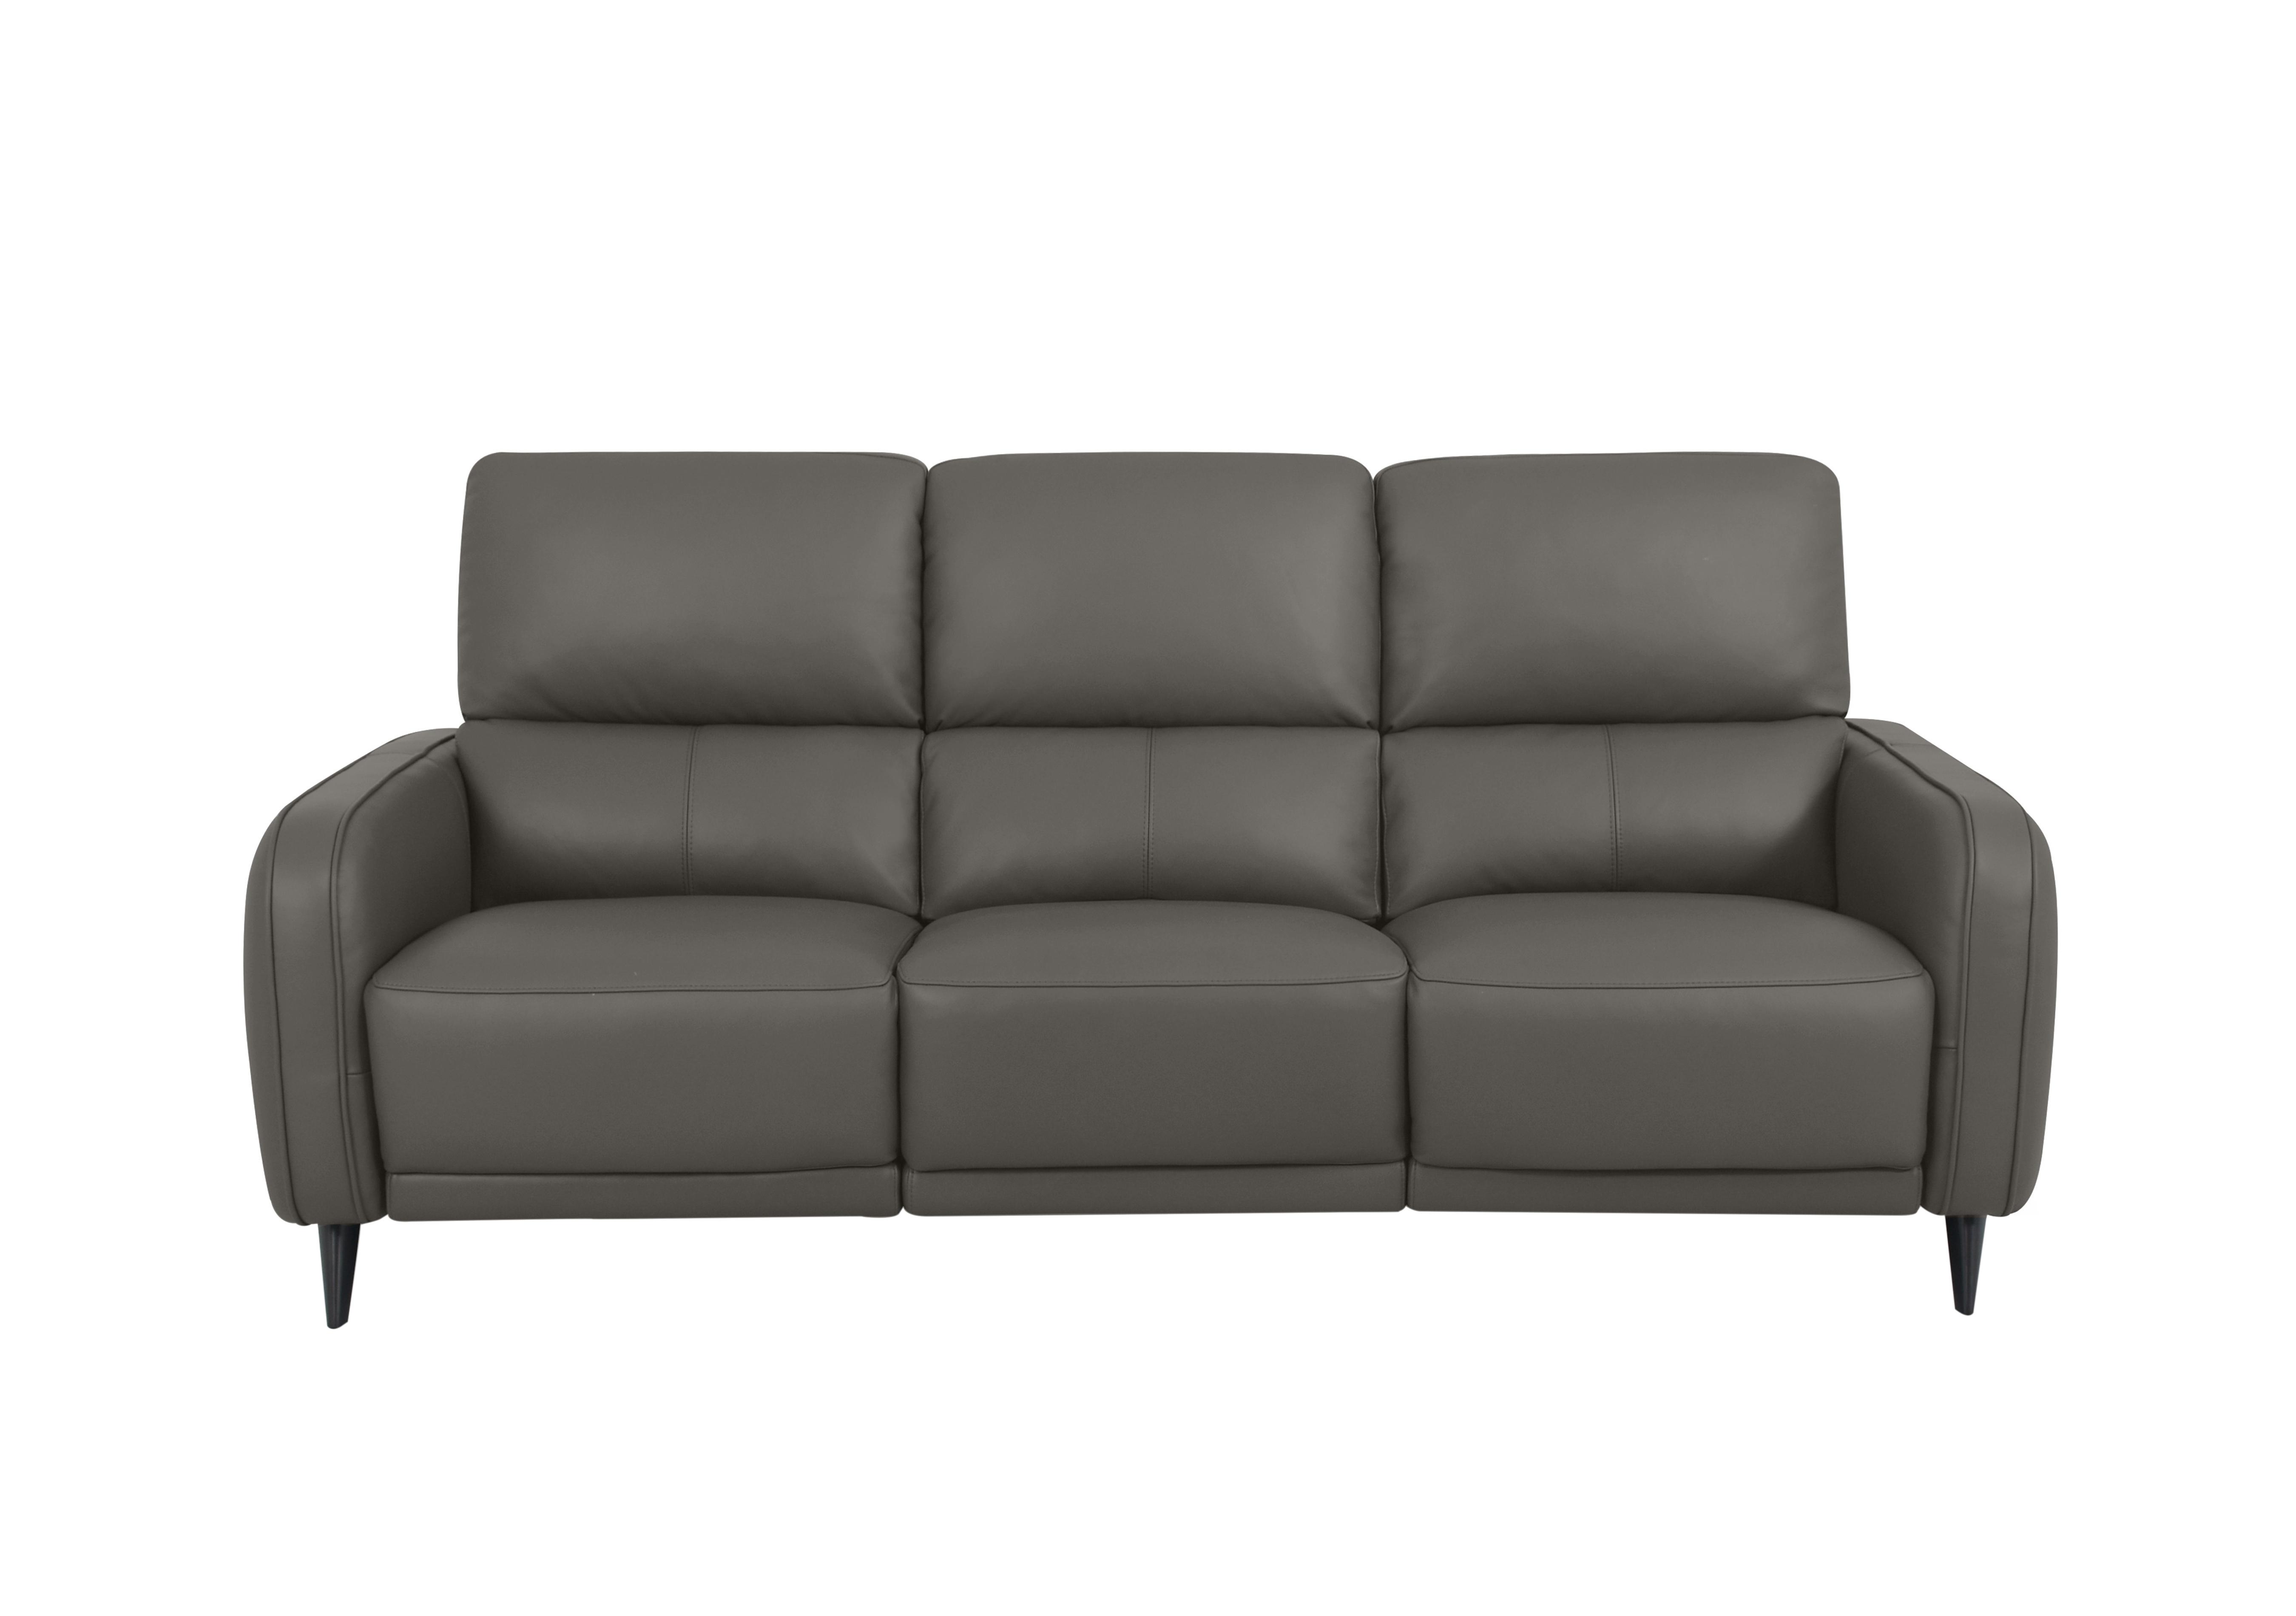 Logan 3 Seater Leather Sofa in Nn-515e Elephant Grey on Furniture Village